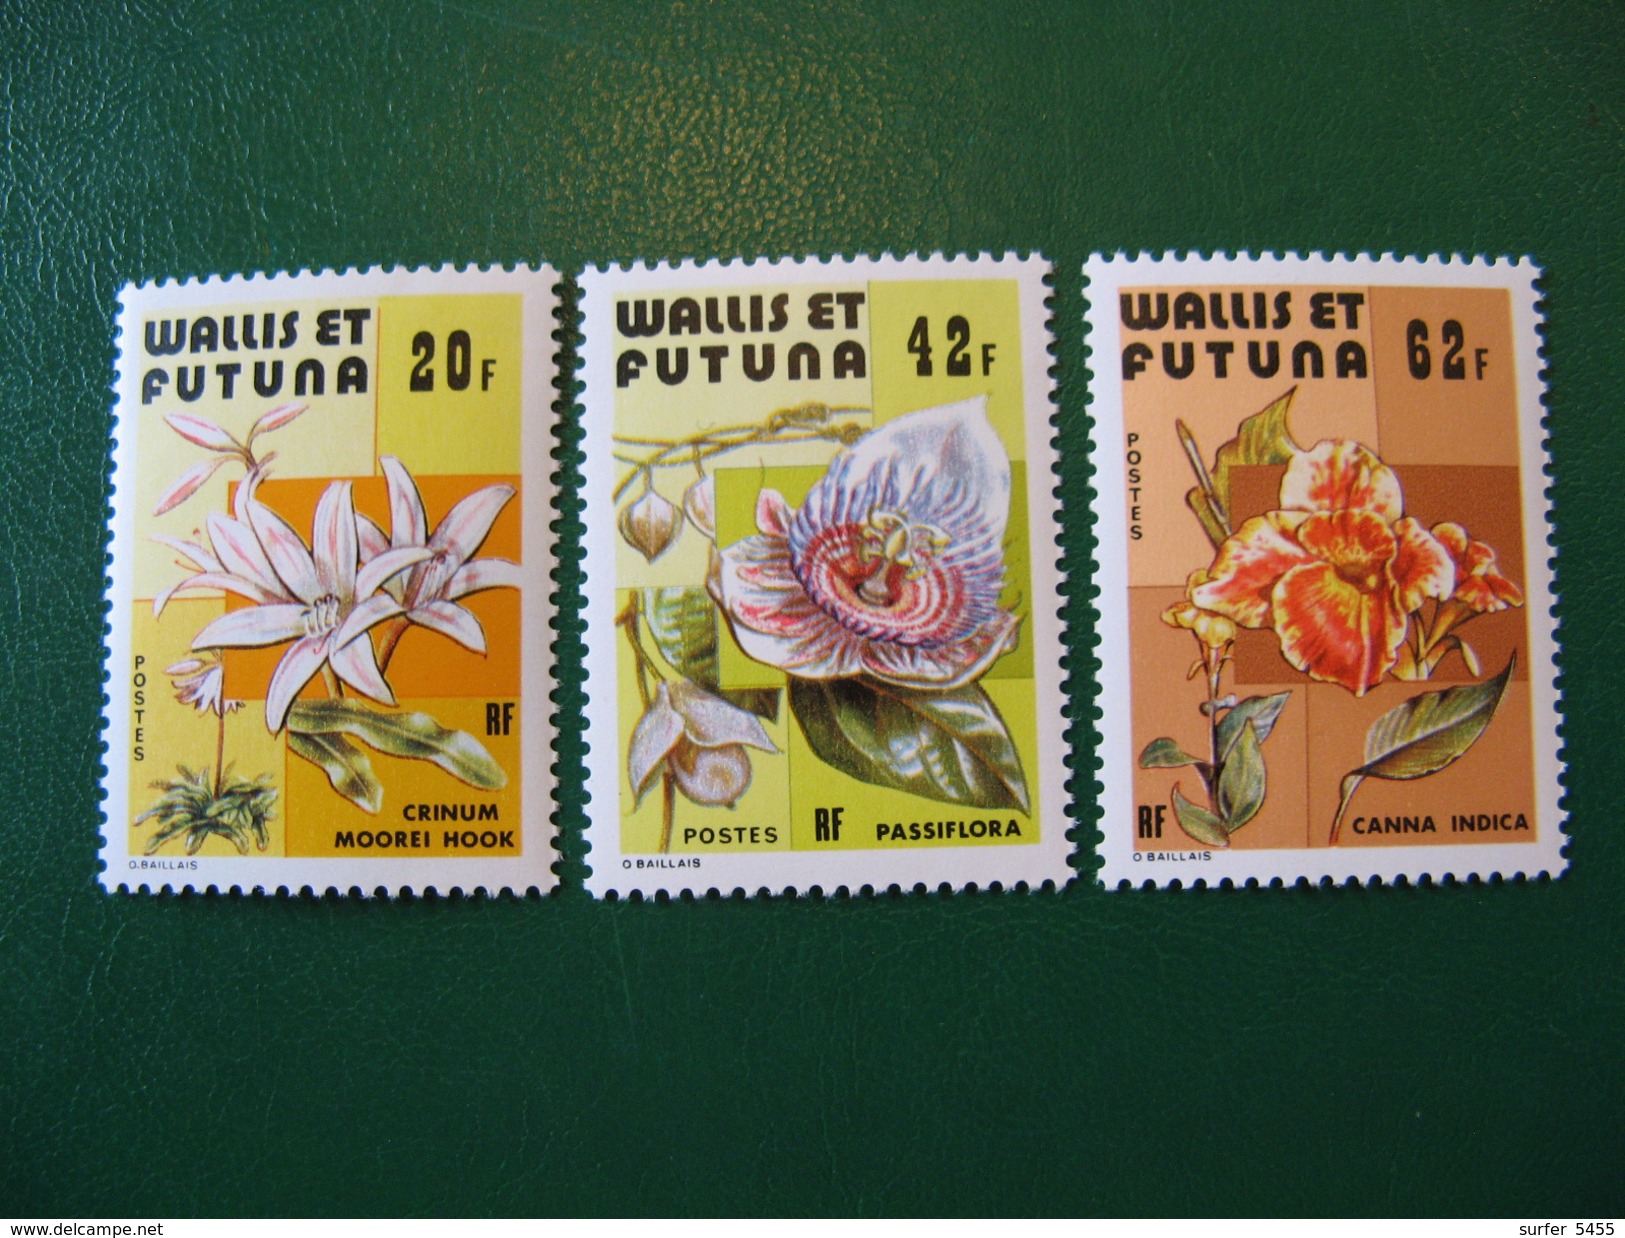 WALLIS YVERT POSTE ORDINAIRE N° 238/240 NEUFS** LUXE COTE 6,20 EUROS - Unused Stamps